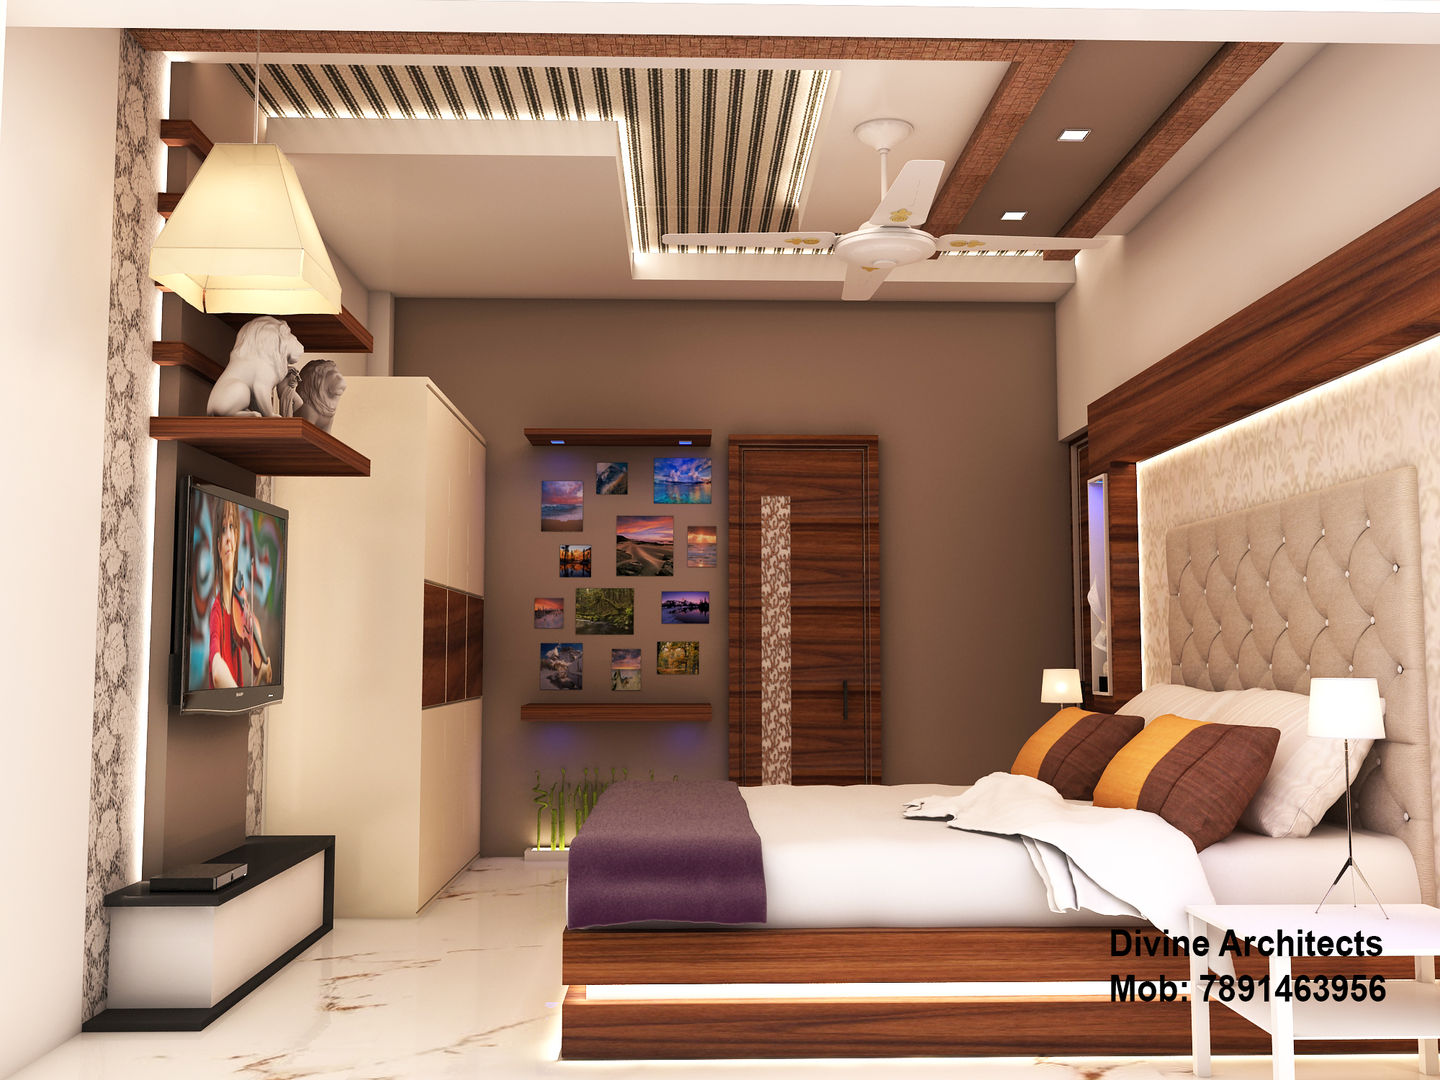 Son_ s bed room interior design for mr. Ramavtar Khunteta jalmahal site joraver Singh gate govind nagar east Jaipur, divine architects divine architects Dormitorios modernos